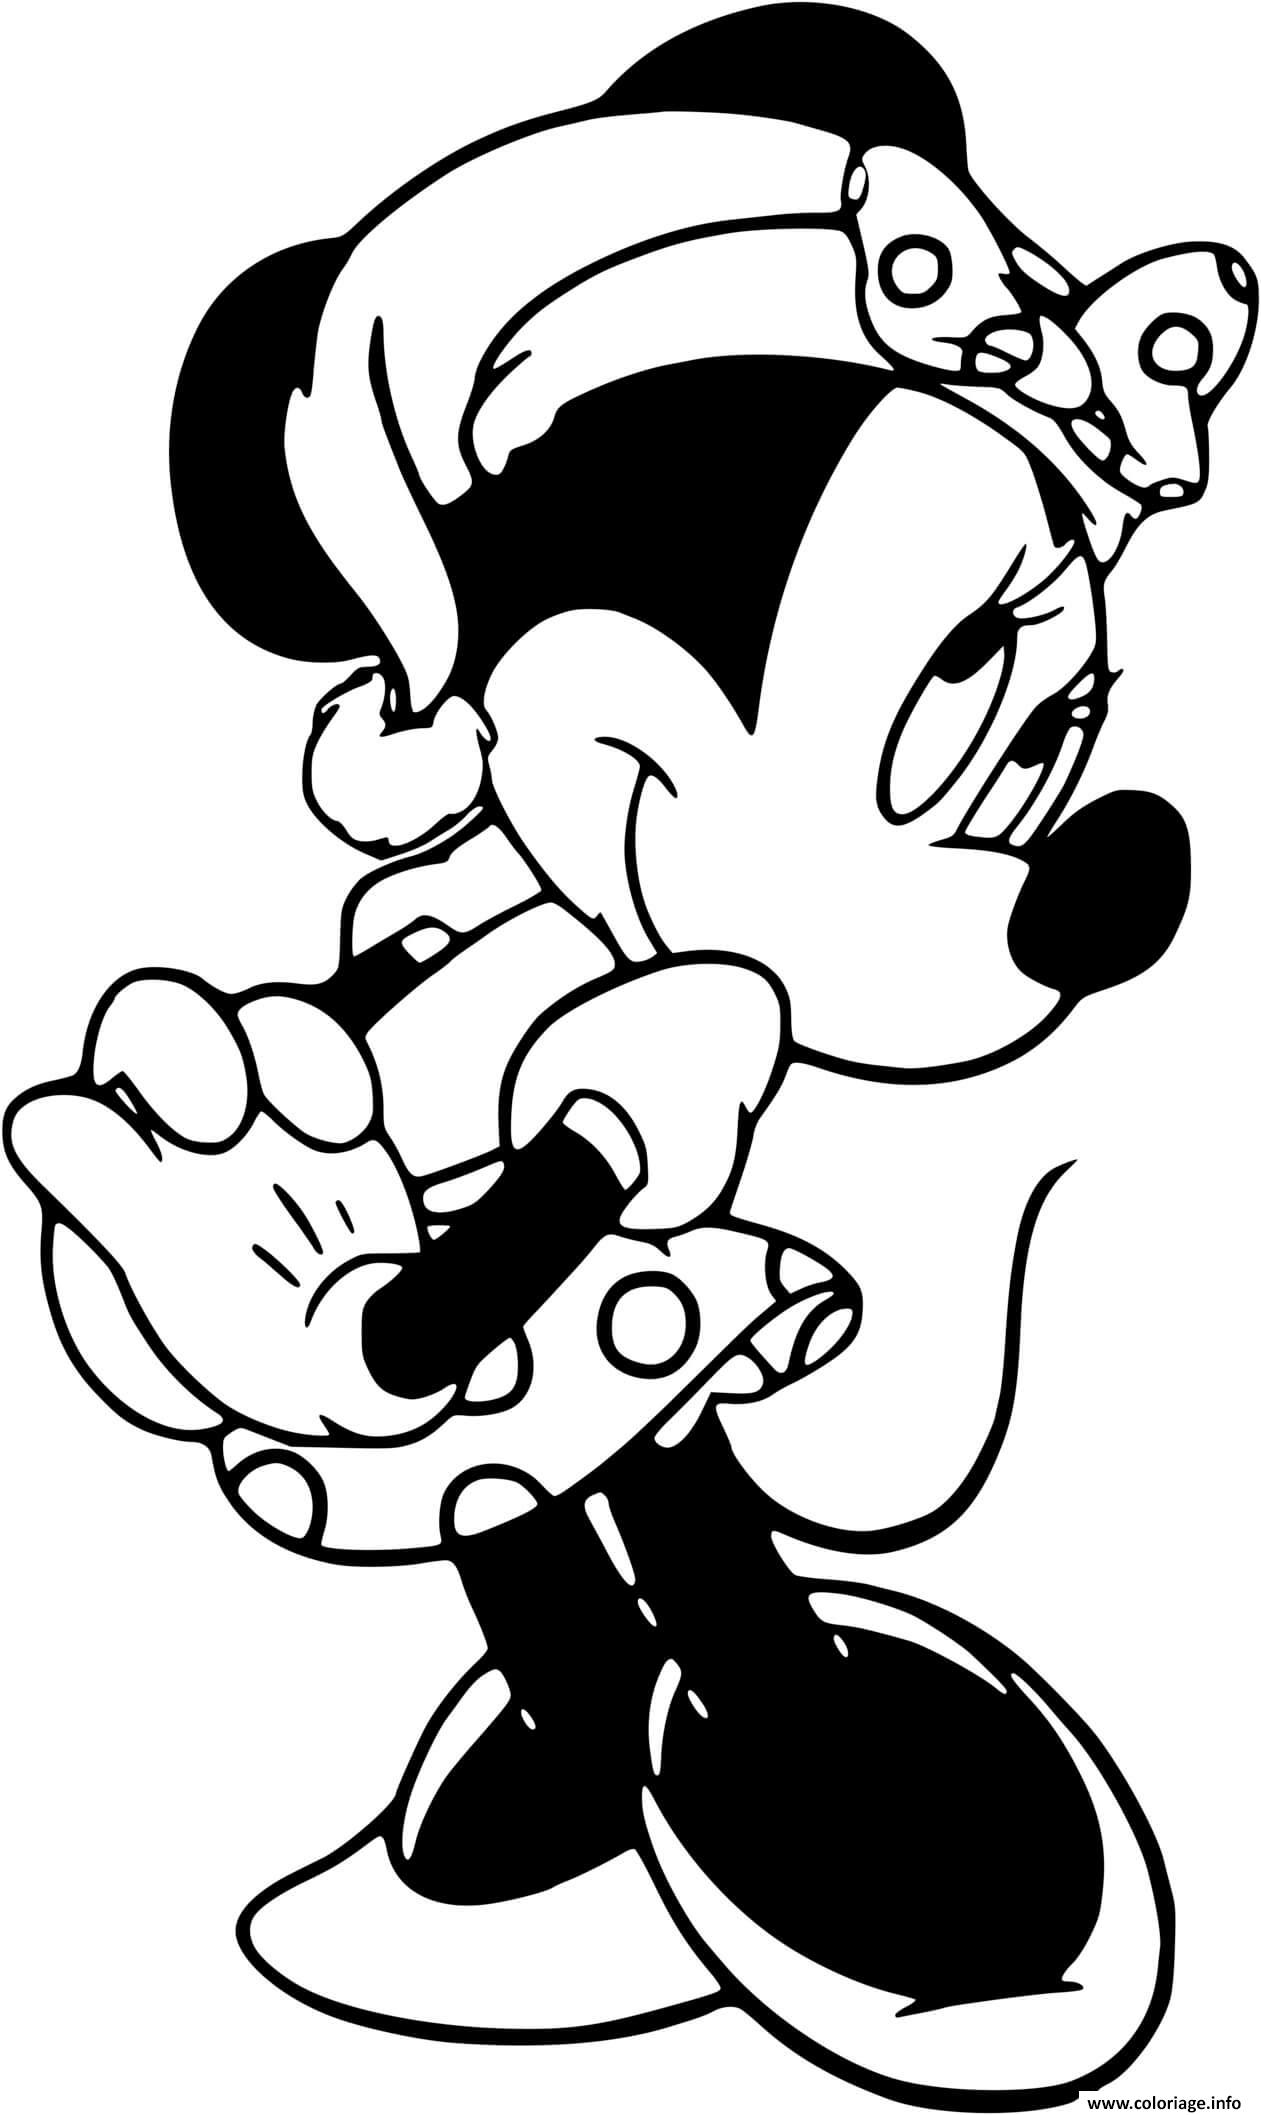 Coloriage Festively Dressed Minnie Mouse Dessin Noel Disney à imprimer